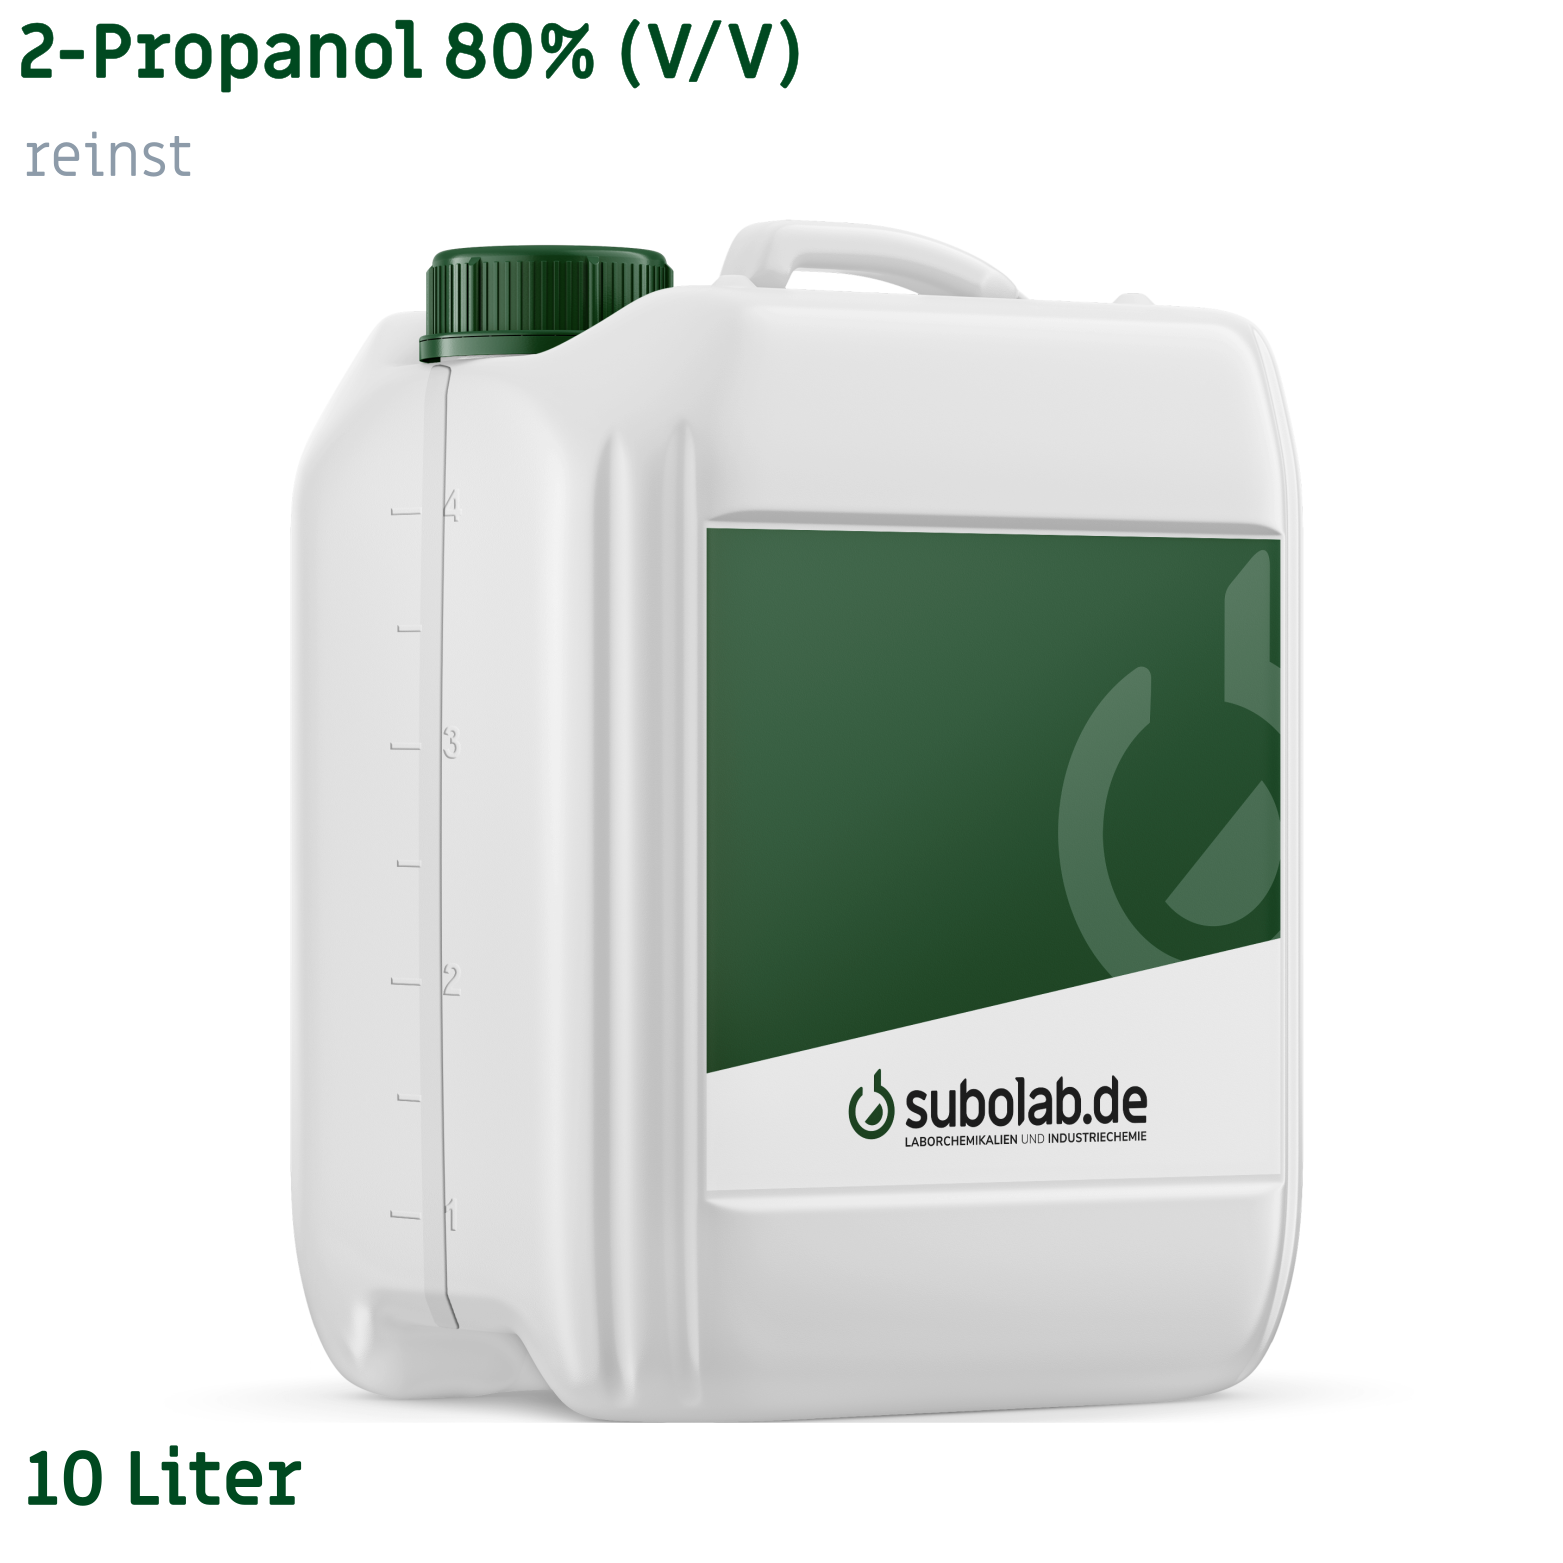 Bild von 2-Propanol 80% (V/V) reinst (10 Liter)